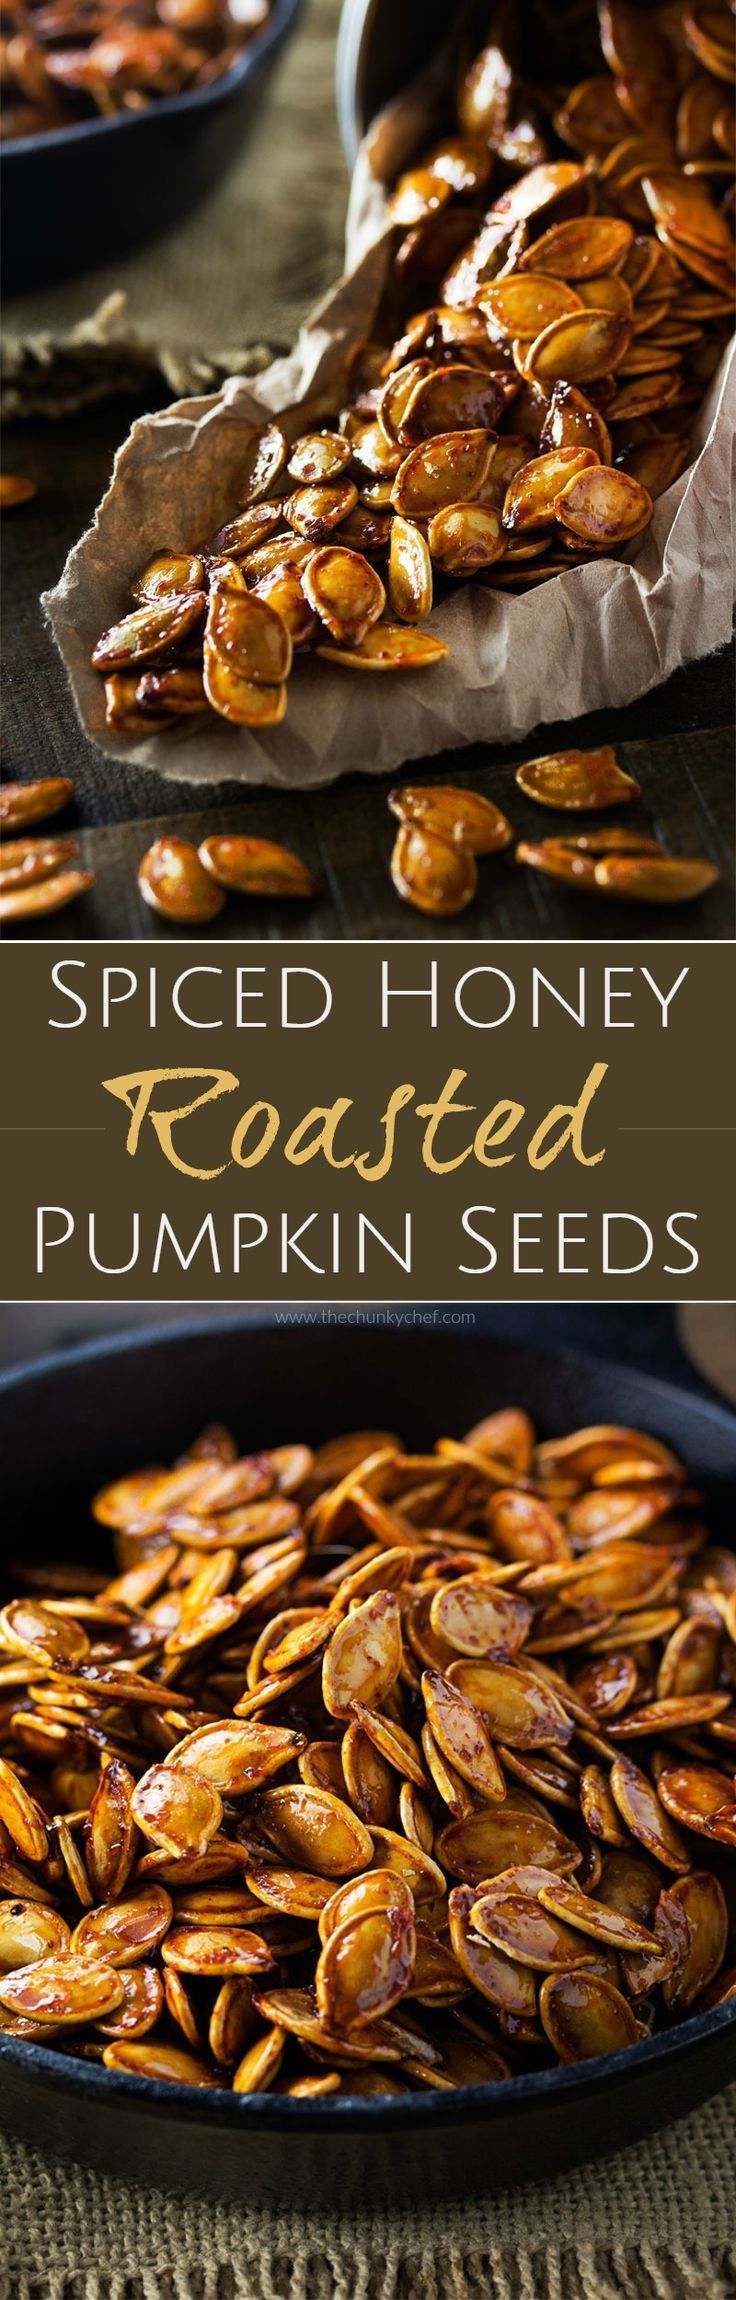 Spiced Honey Roasted Pumpkin Seeds | Waste not, want not… turn leftover pumpkins